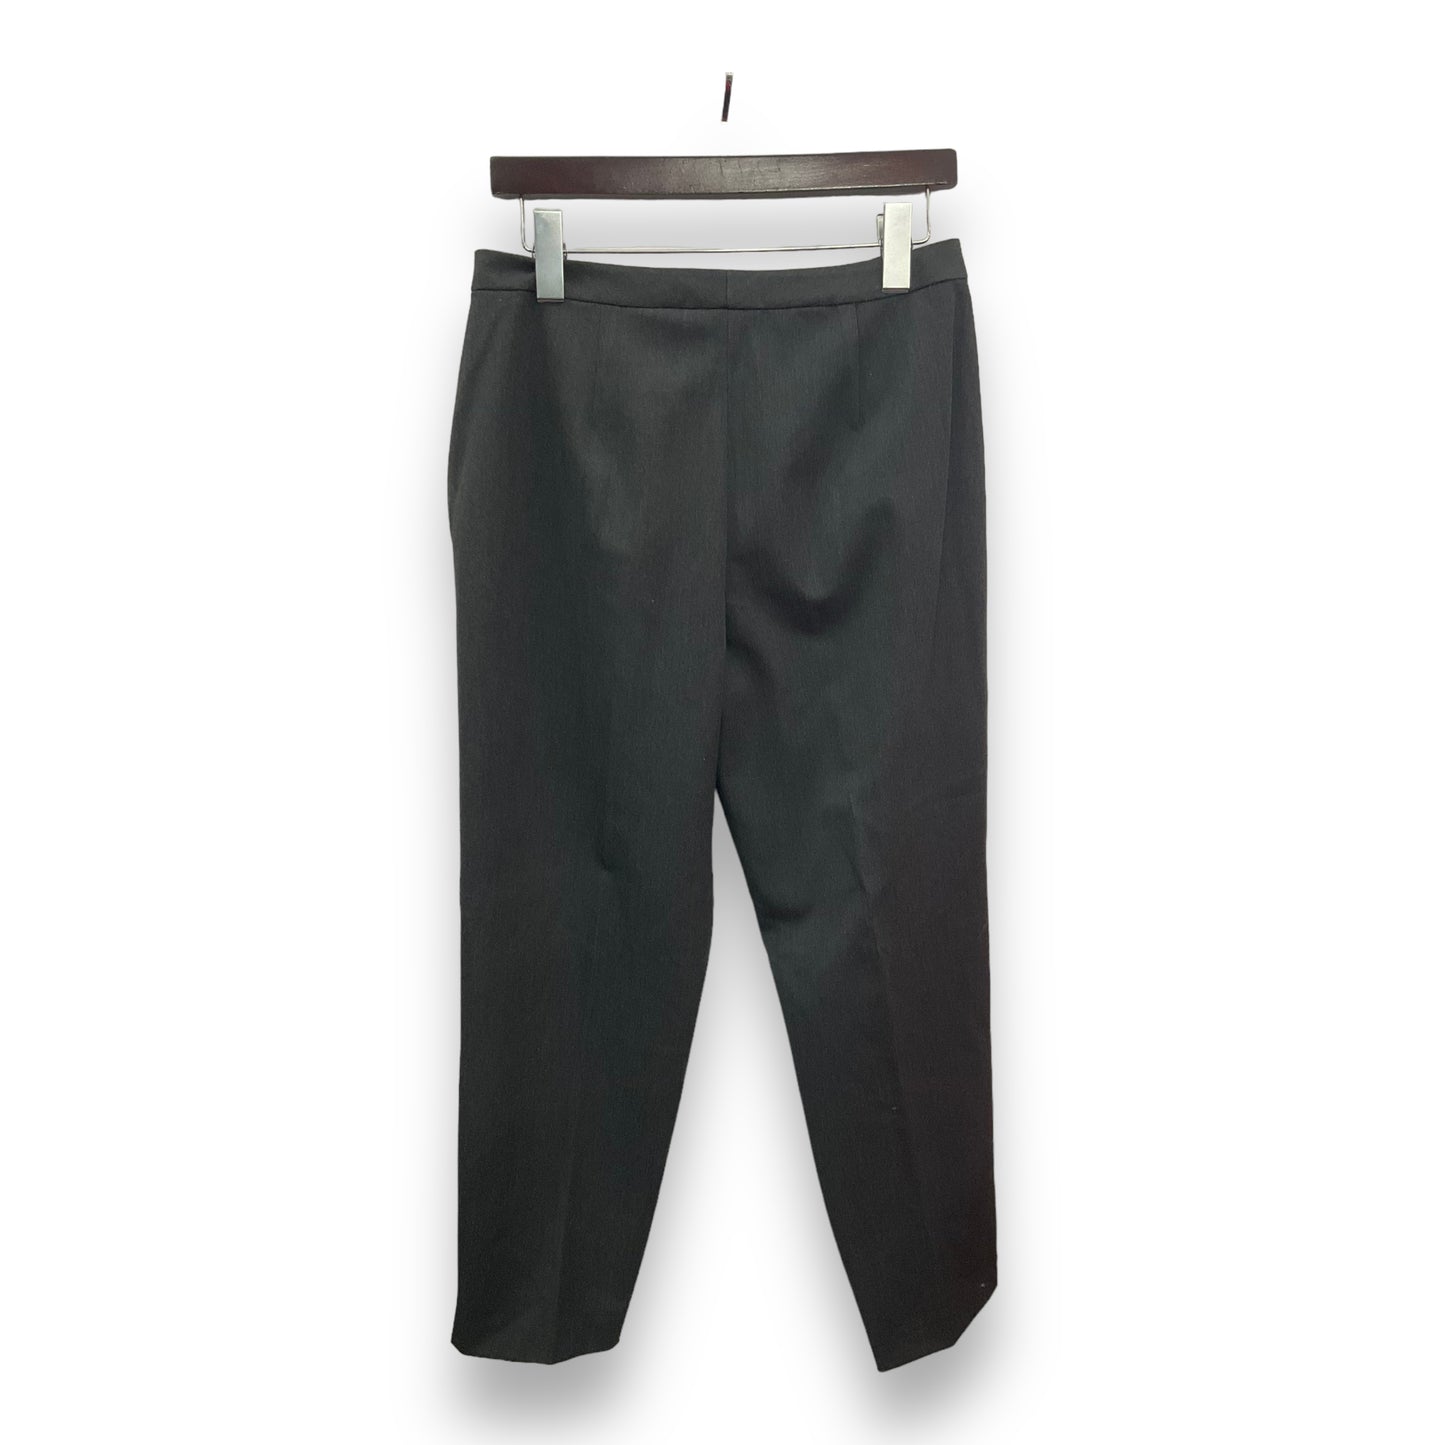 Pants Work/dress By Talbots  Size: 10